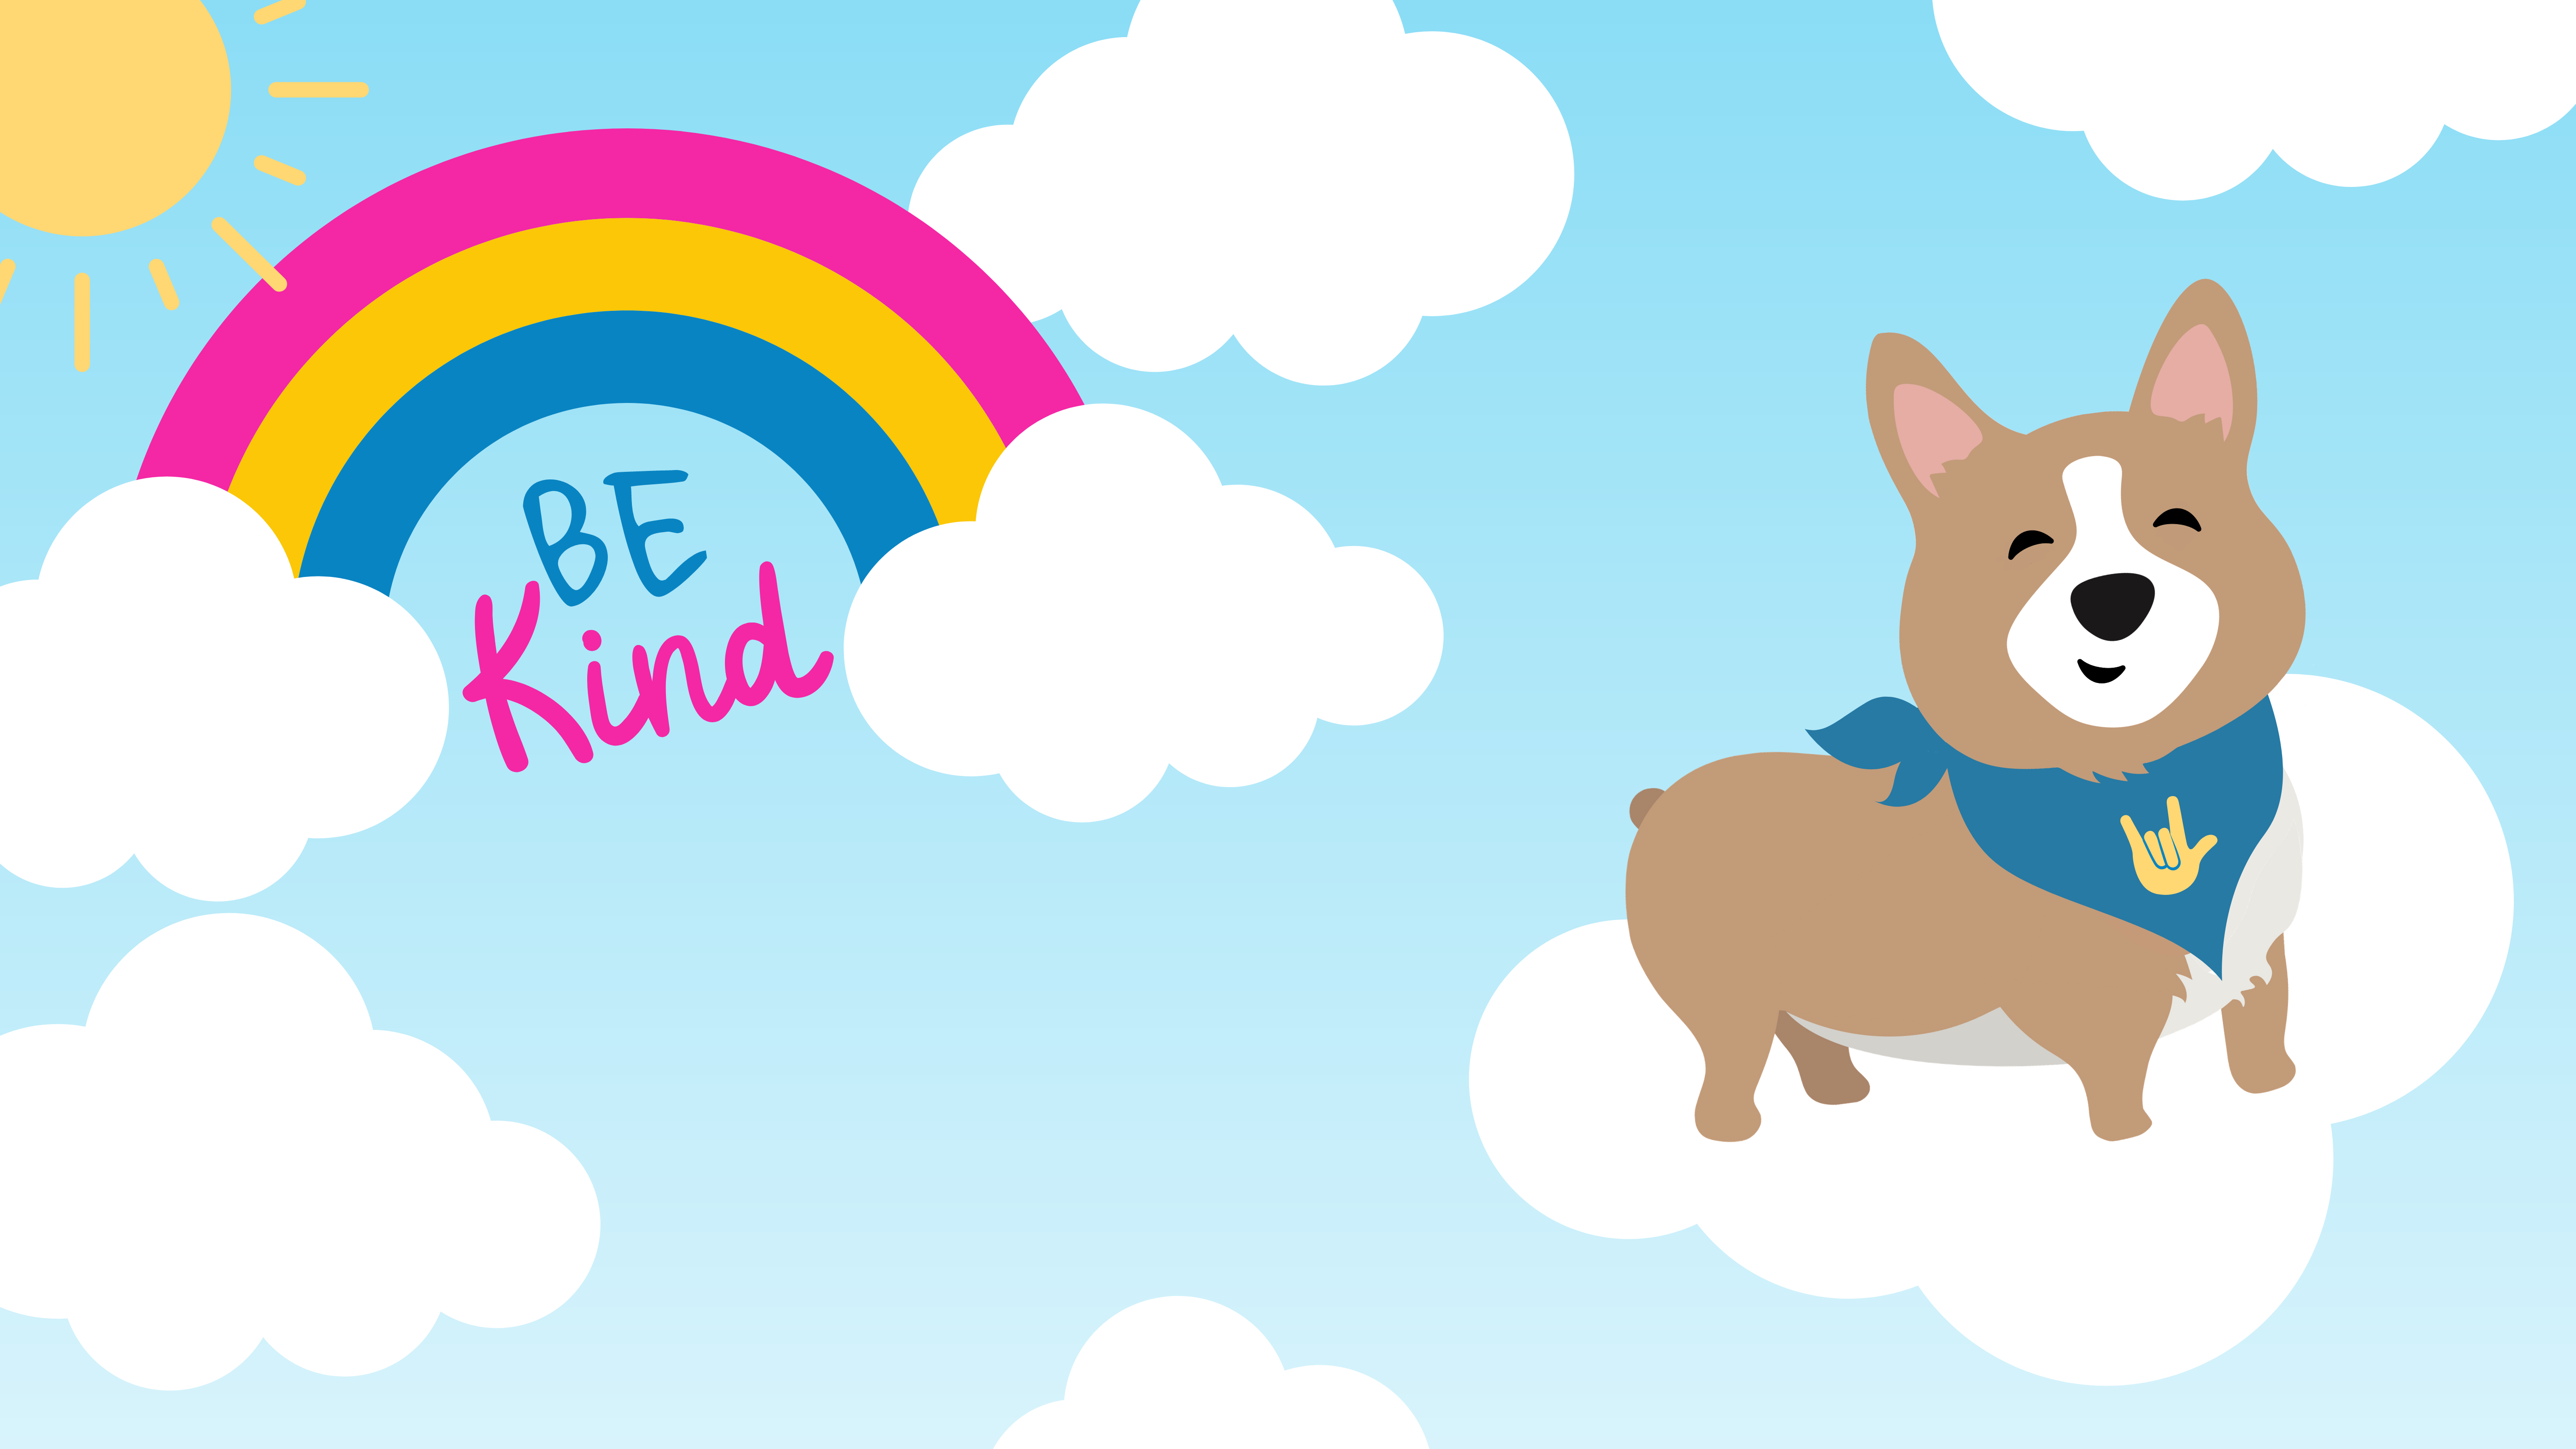 Cori flies through the sky on a cloud with a rainbow following behind. Text under the rainbow says "Be Kind"